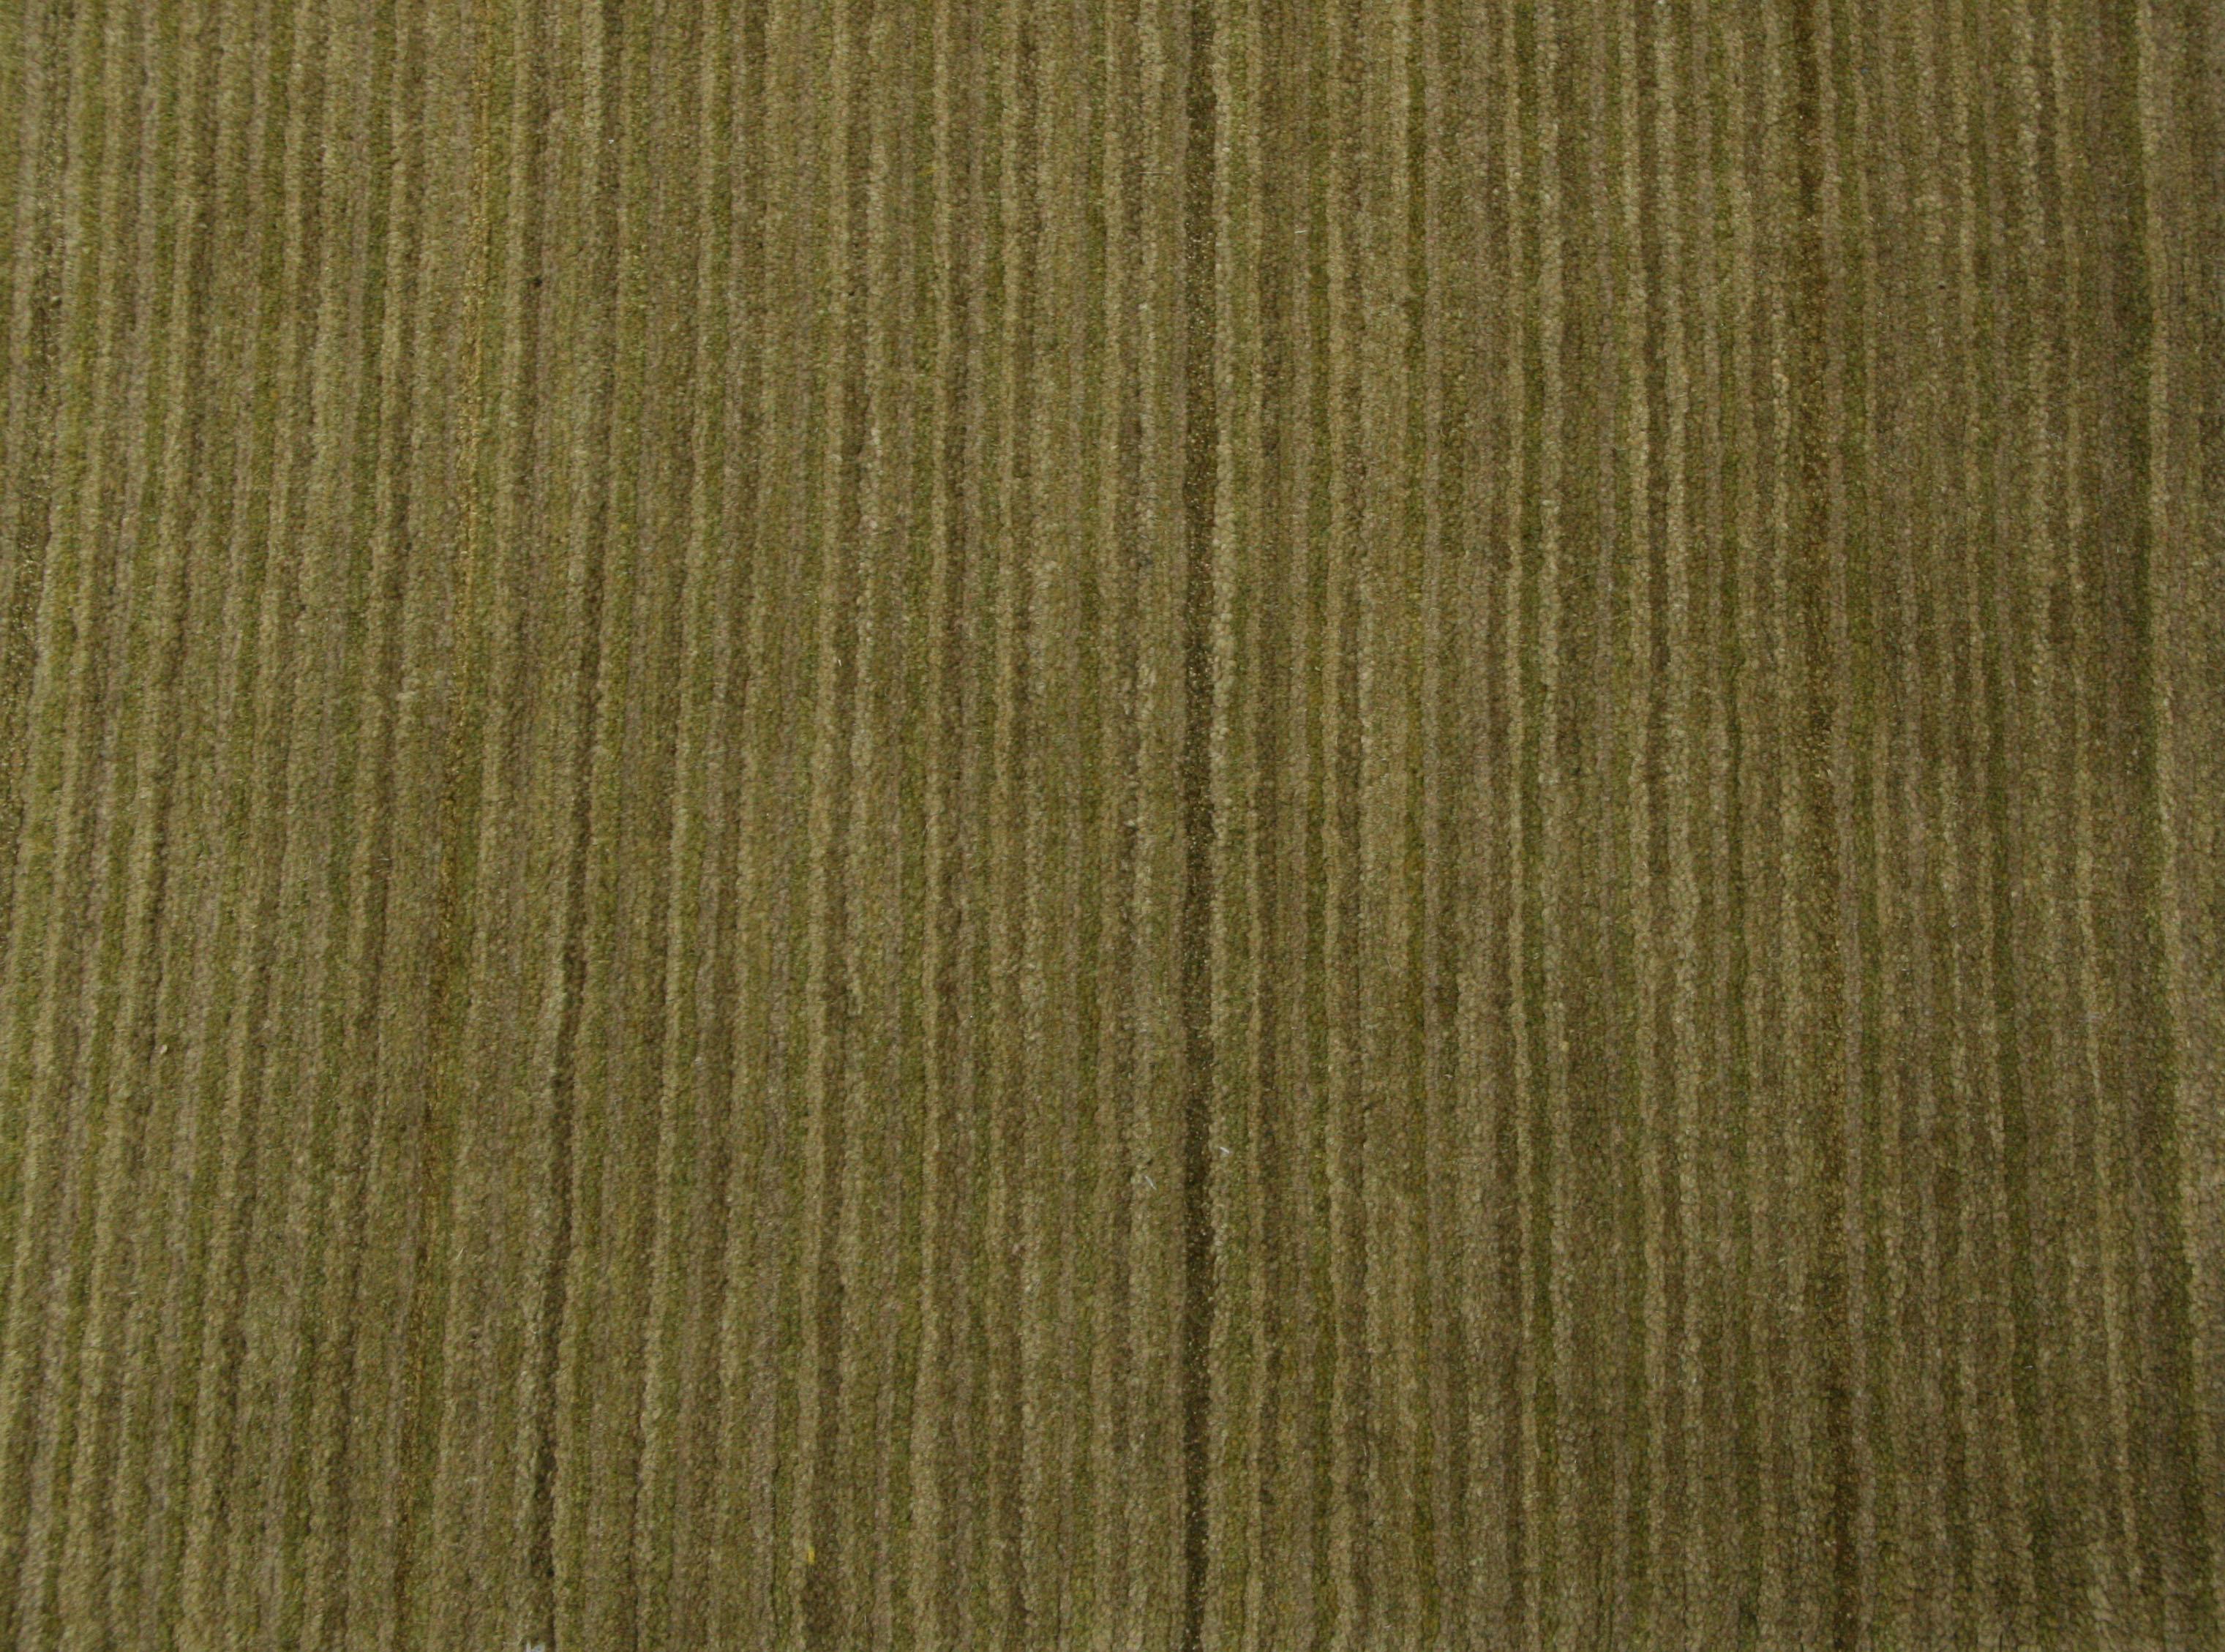 stripe carpets for sale